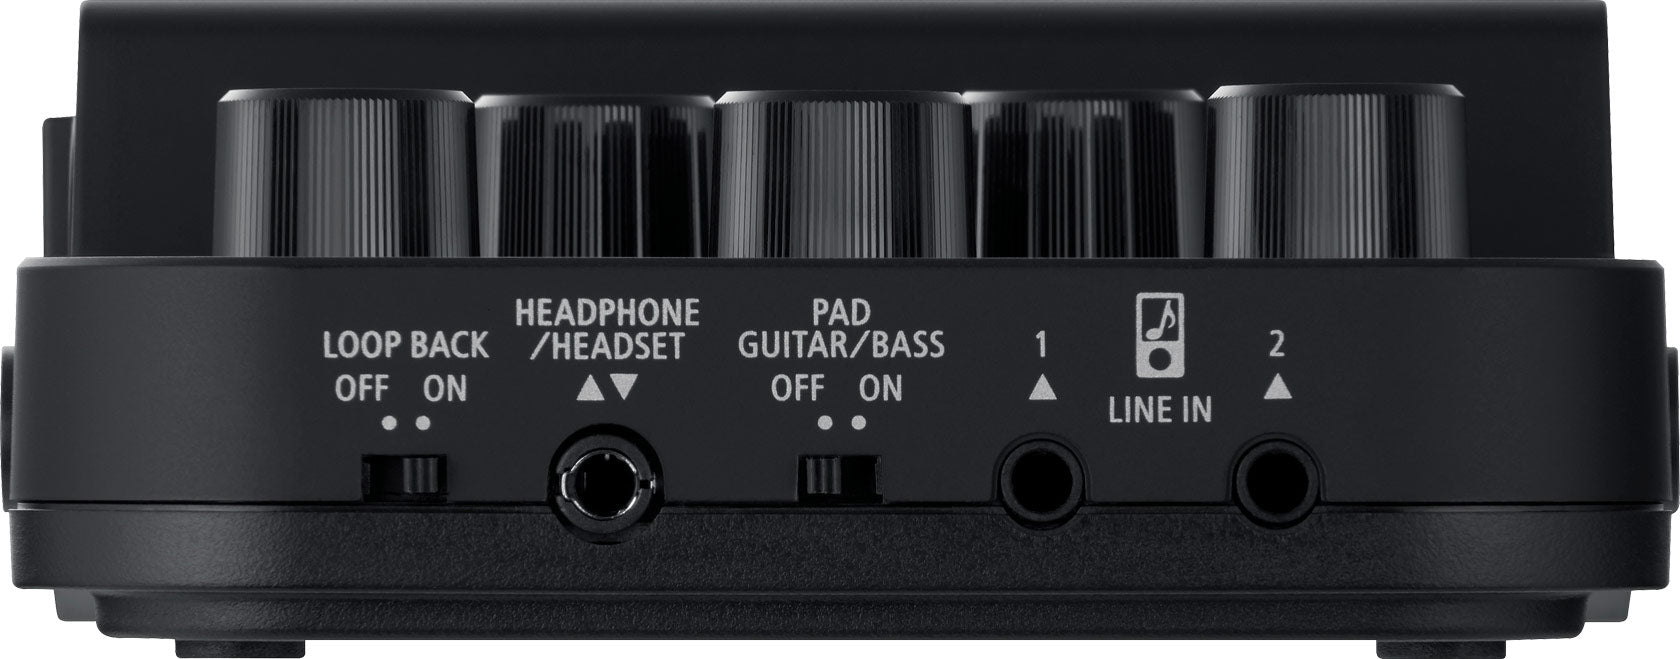 Roland GO:MIXERPRO-X Digital Audio Mixer for Smart Phones IOS & Android Devices